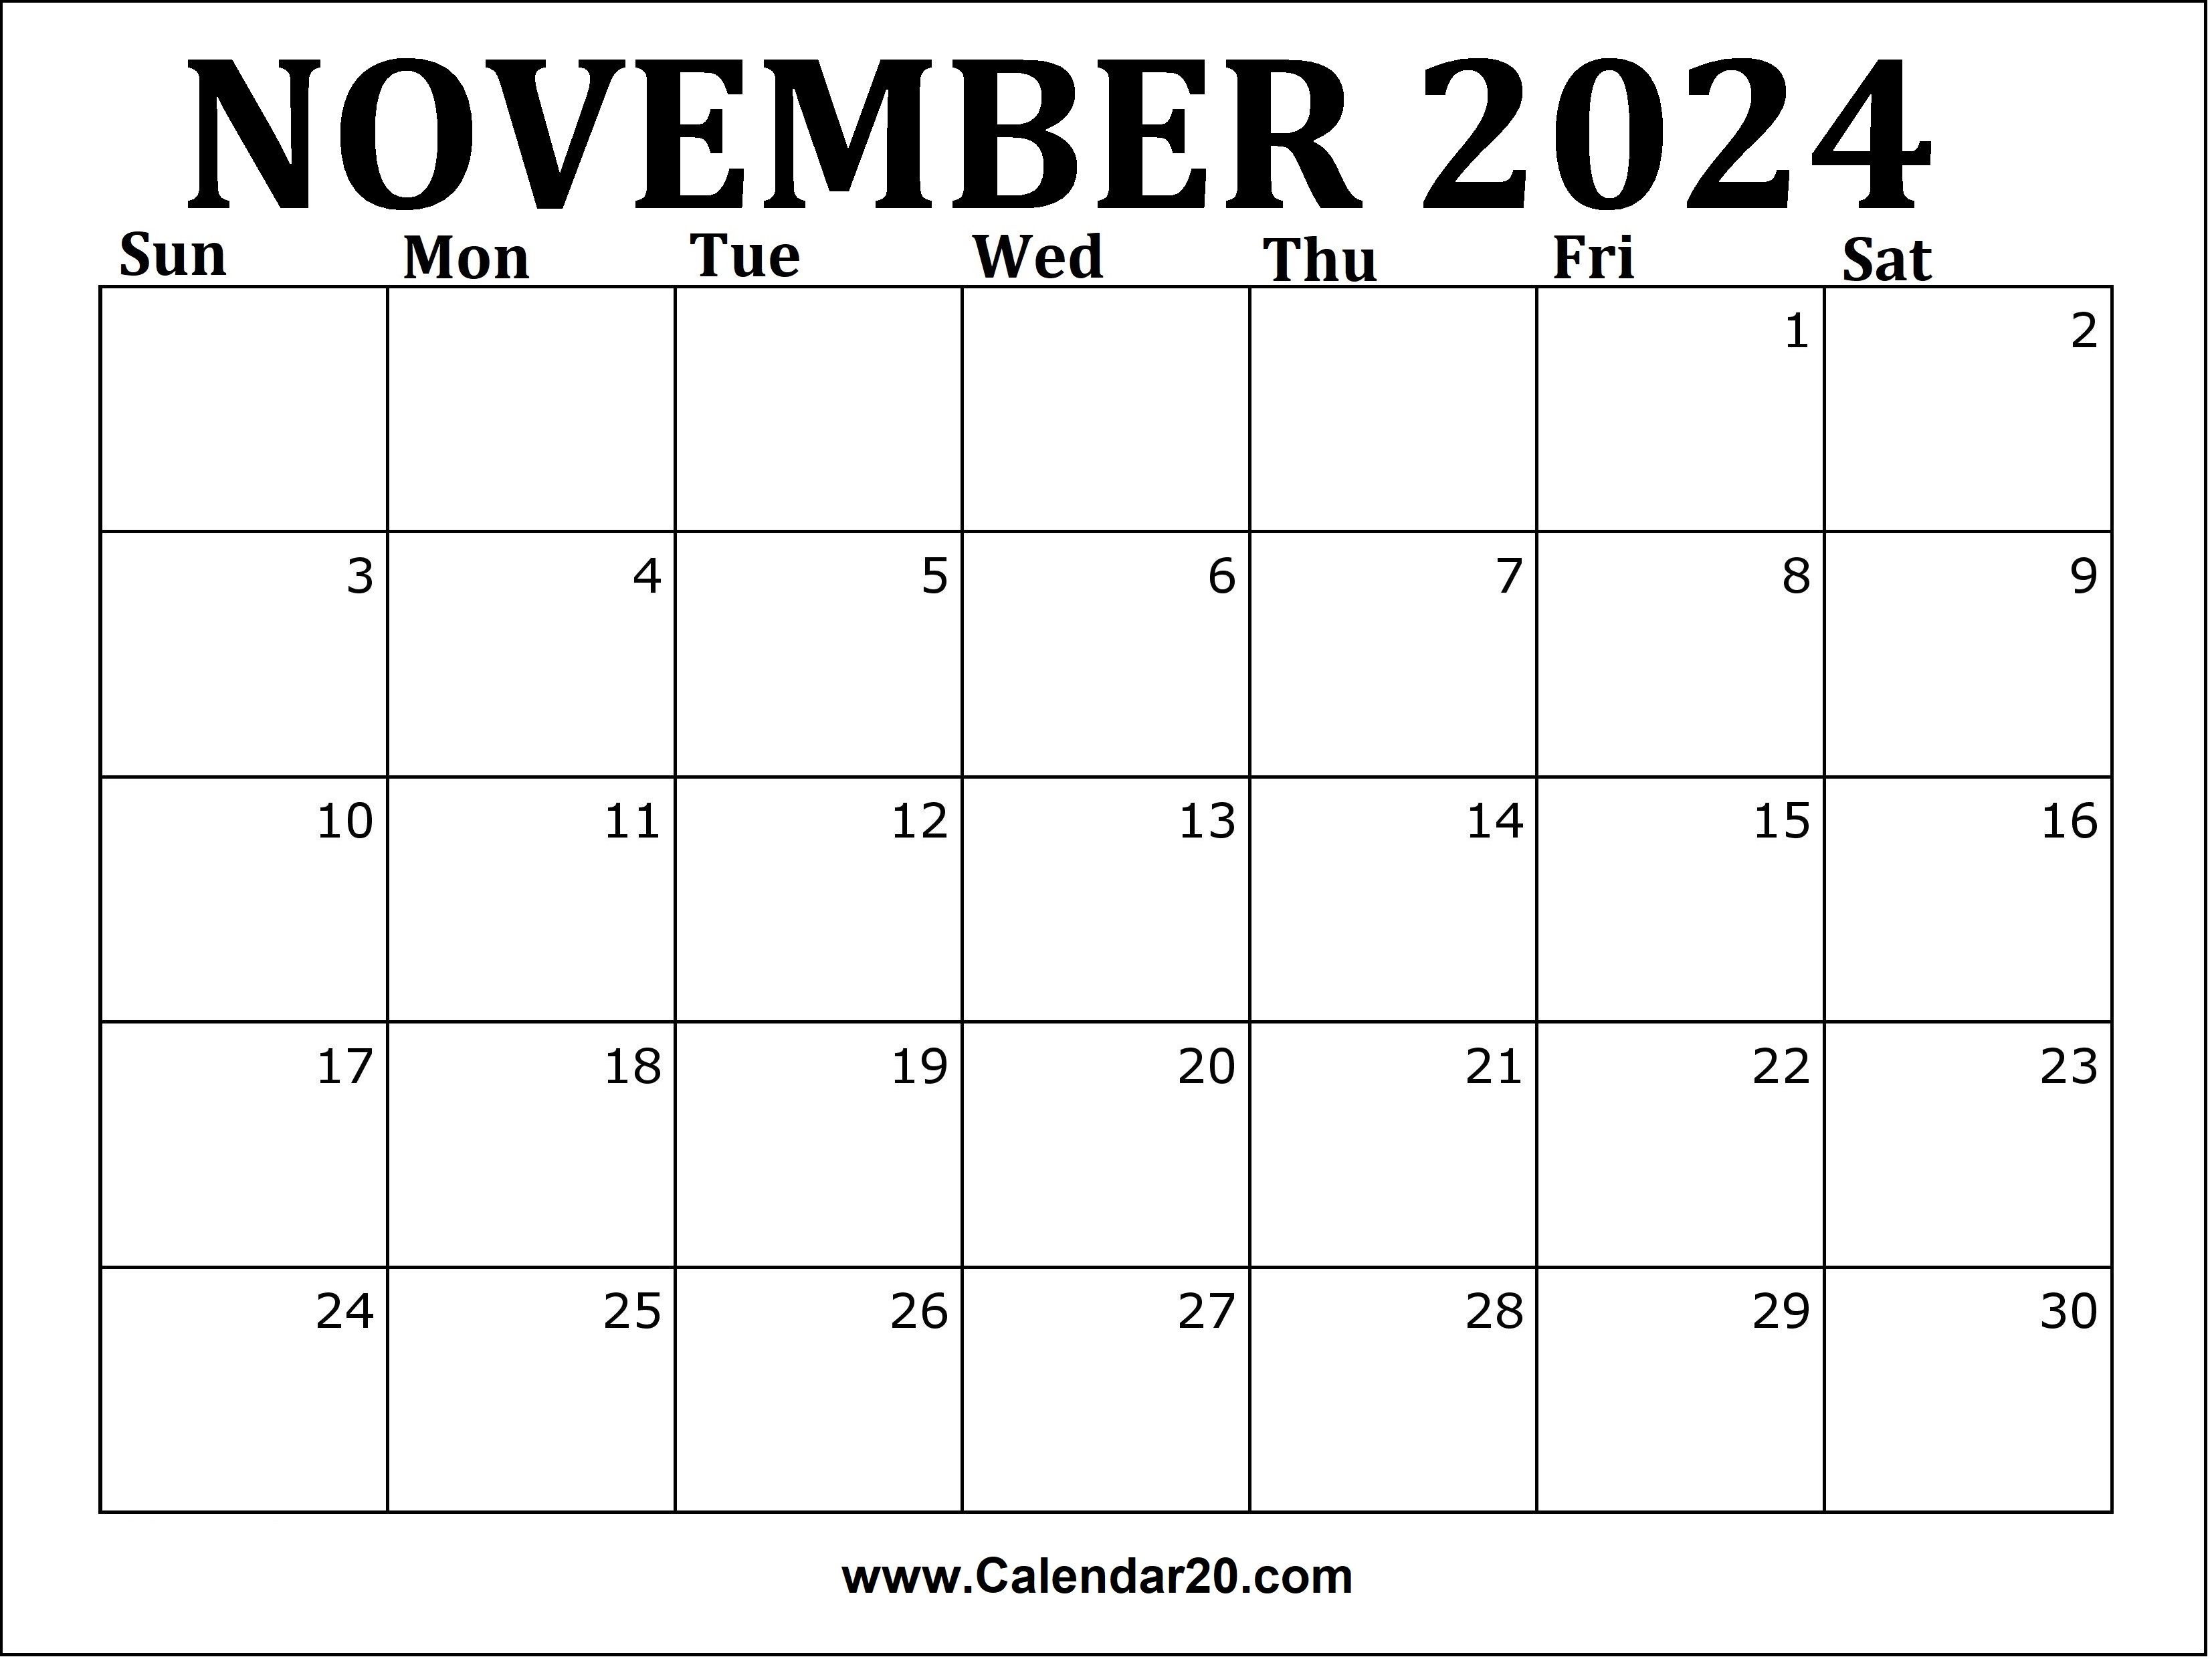 November 2024 Calendar Horizontally Alfy Philippe